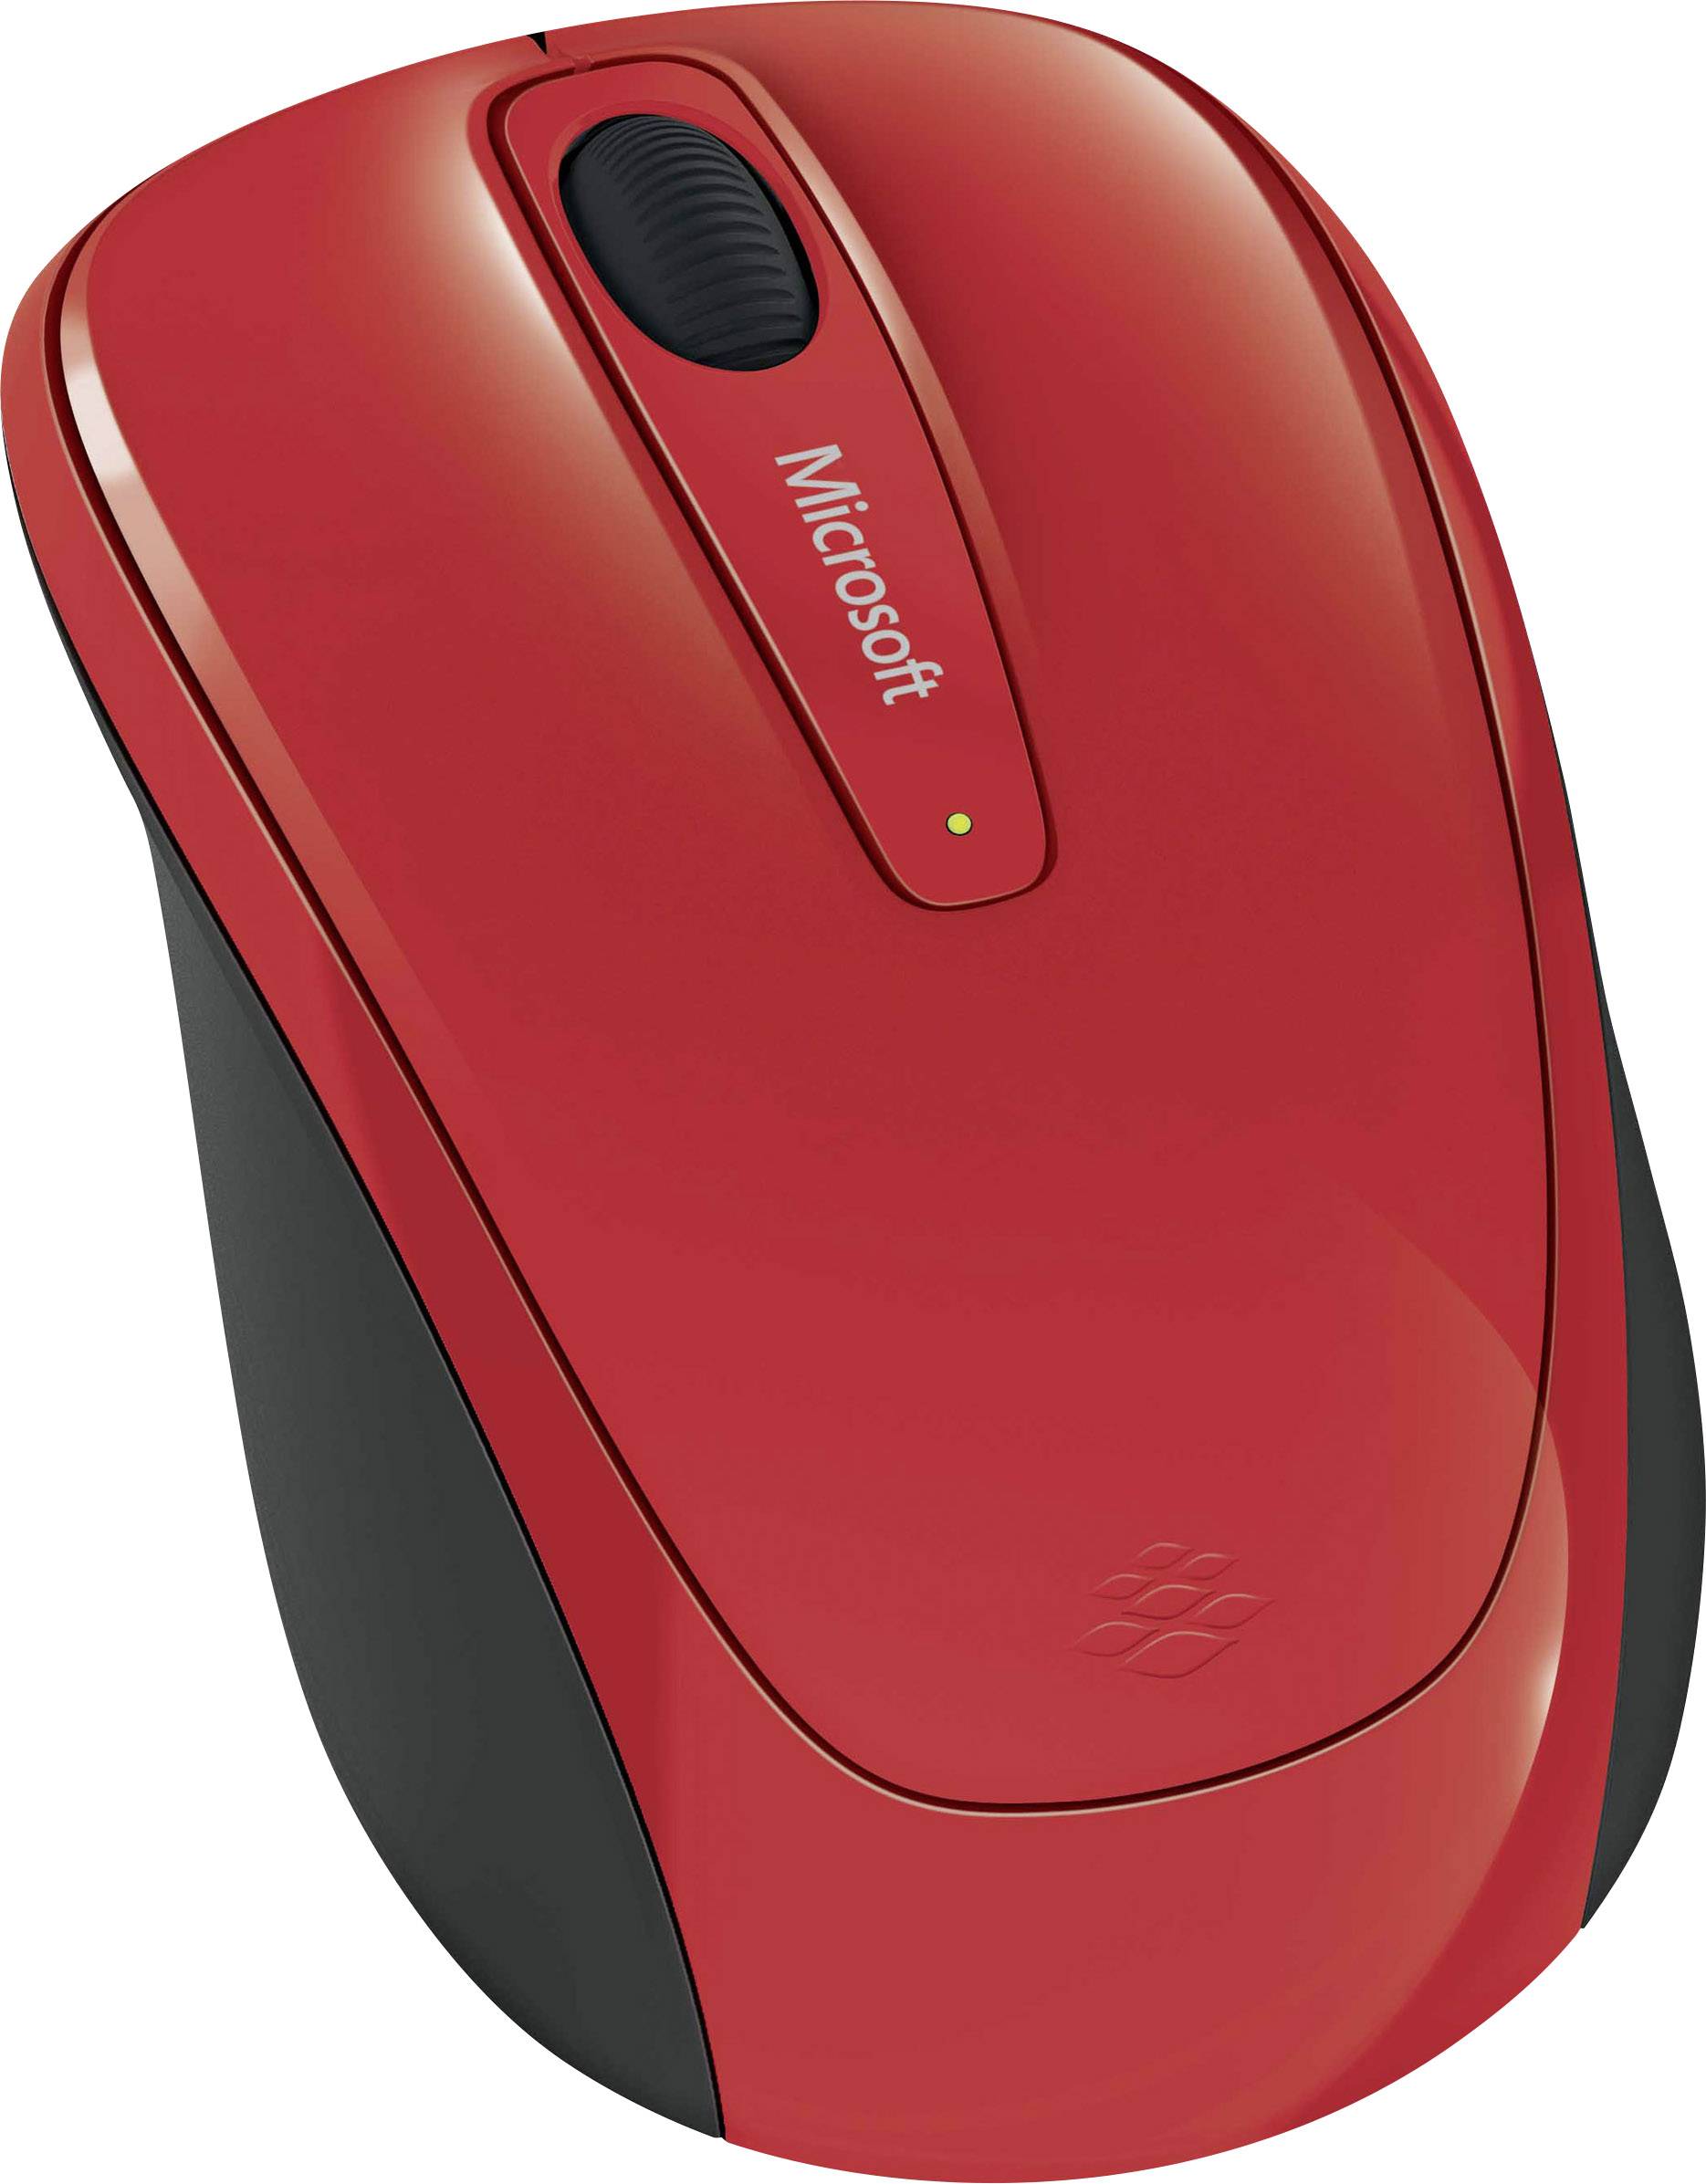 microsoft wireless mouse 3500 to logitech reciever